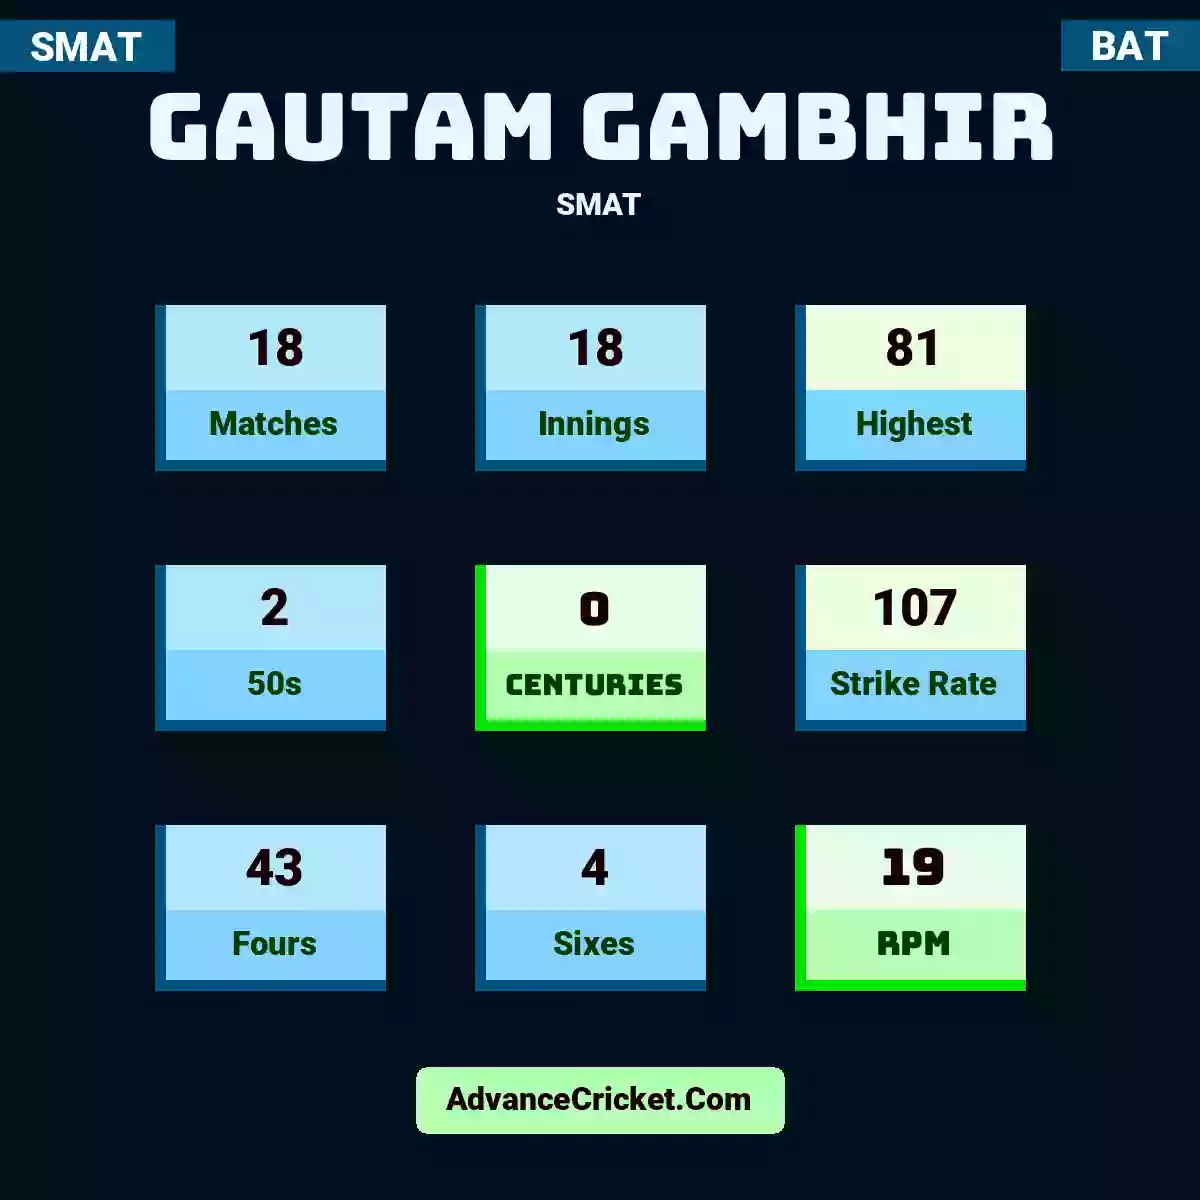 Gautam Gambhir SMAT , Gautam Gambhir played 18 matches, scored 81 runs as highest, 2 half-centuries, and 0 centuries, with a strike rate of 107. G.Gambhir hit 43 fours and 4 sixes, with an RPM of 19.